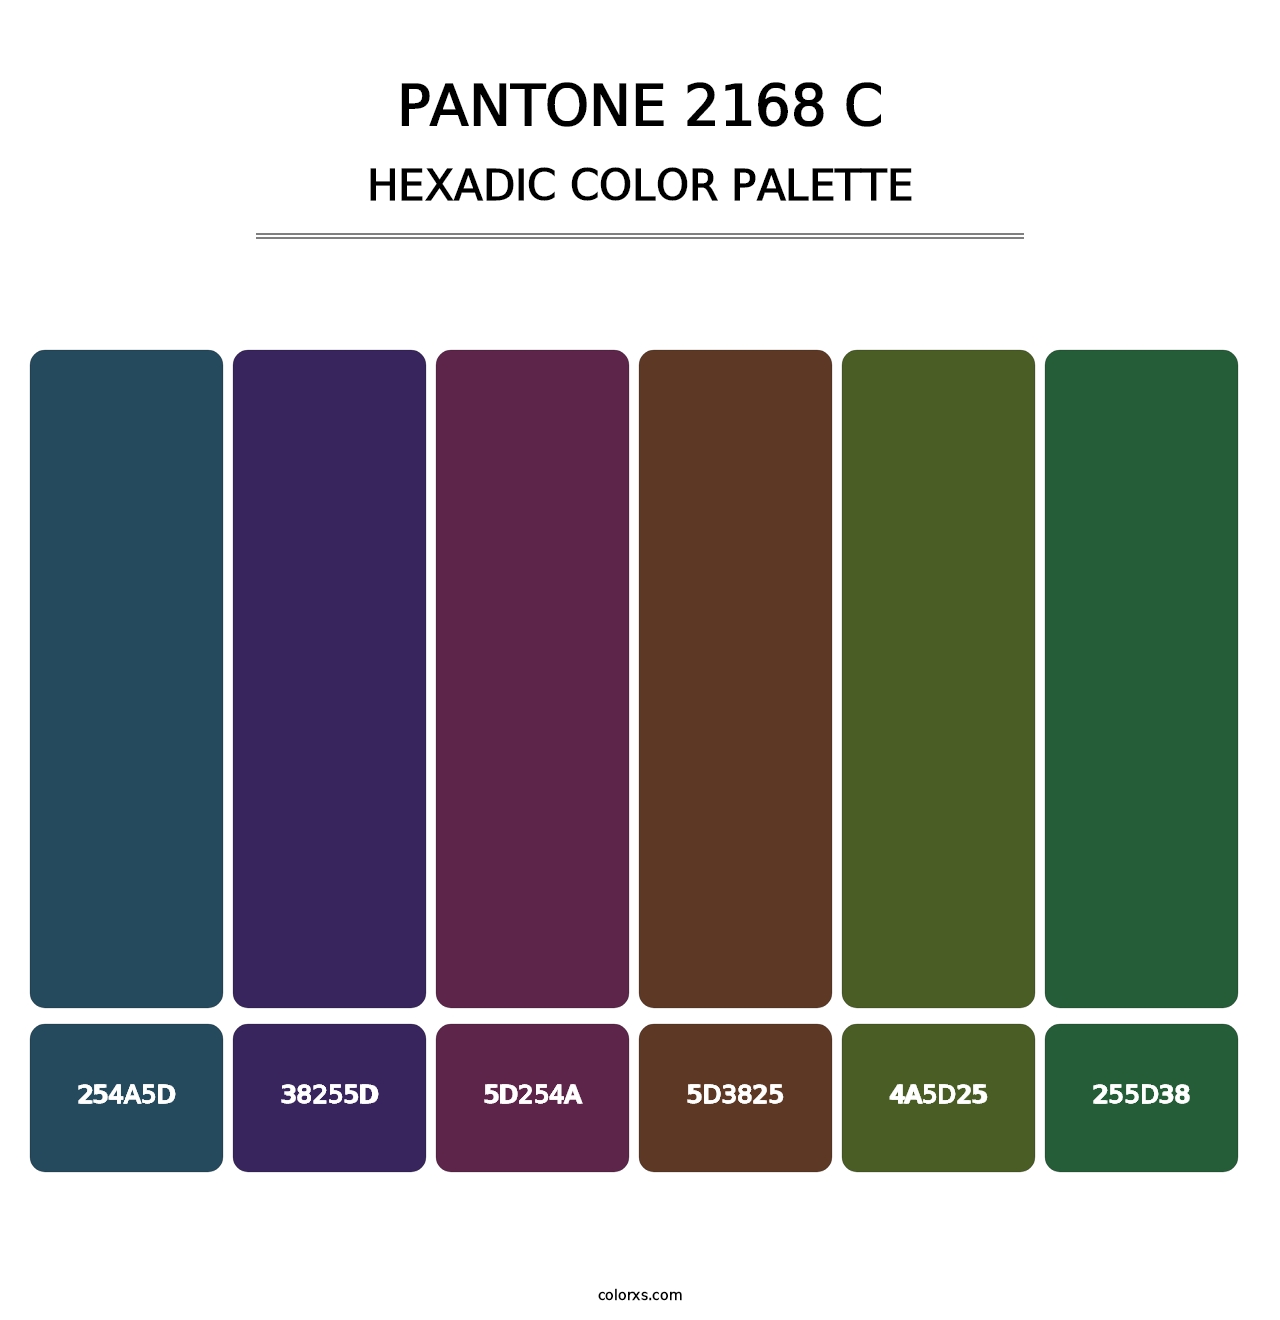 PANTONE 2168 C - Hexadic Color Palette